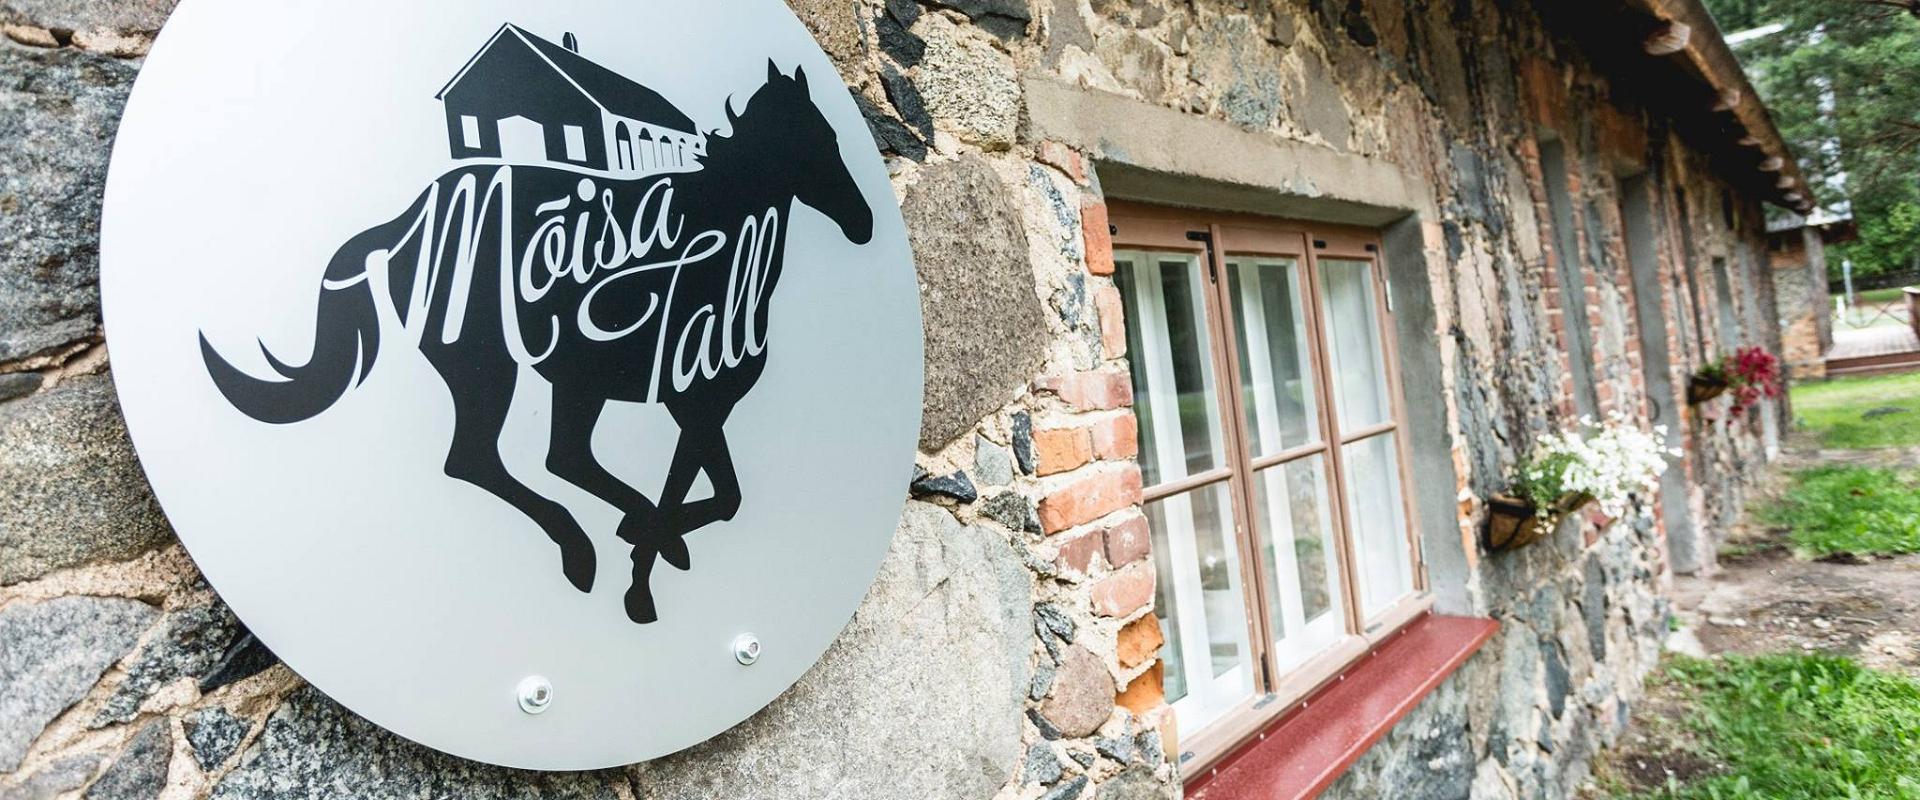 Alatskivi Mõisa Tall pub logo with a horse